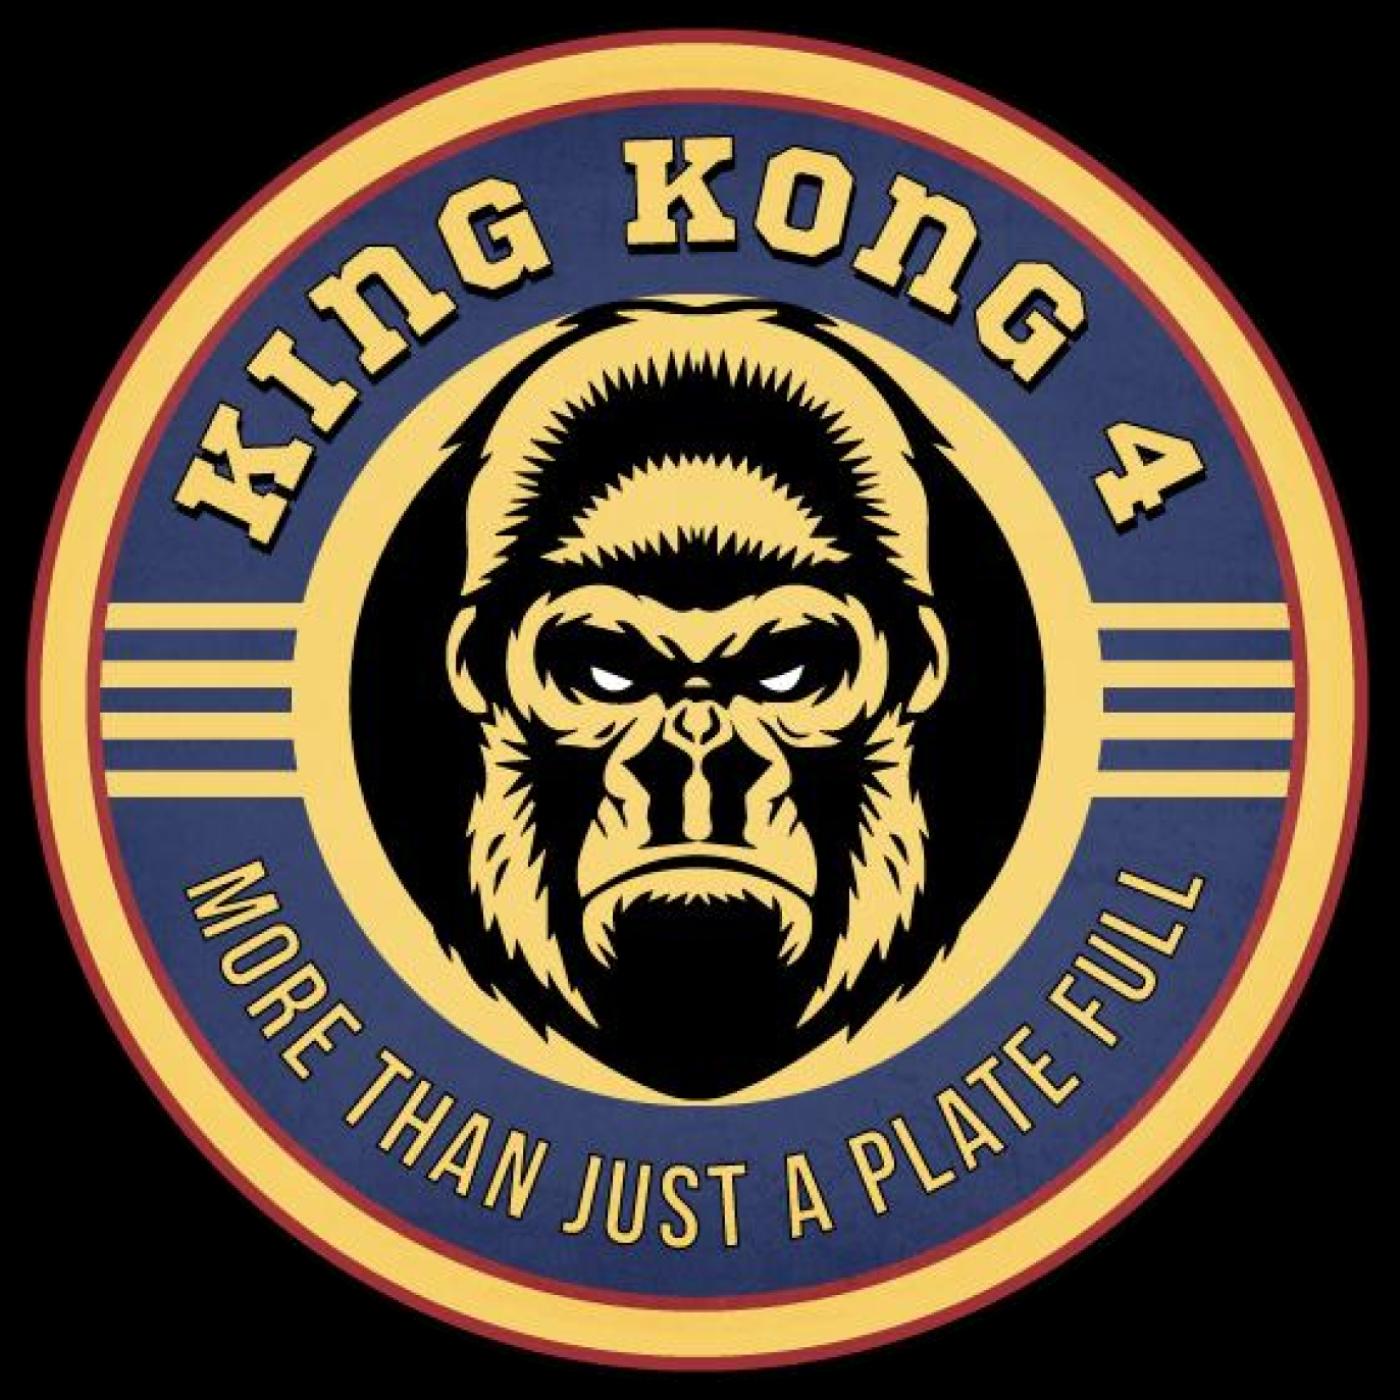 King kong 4